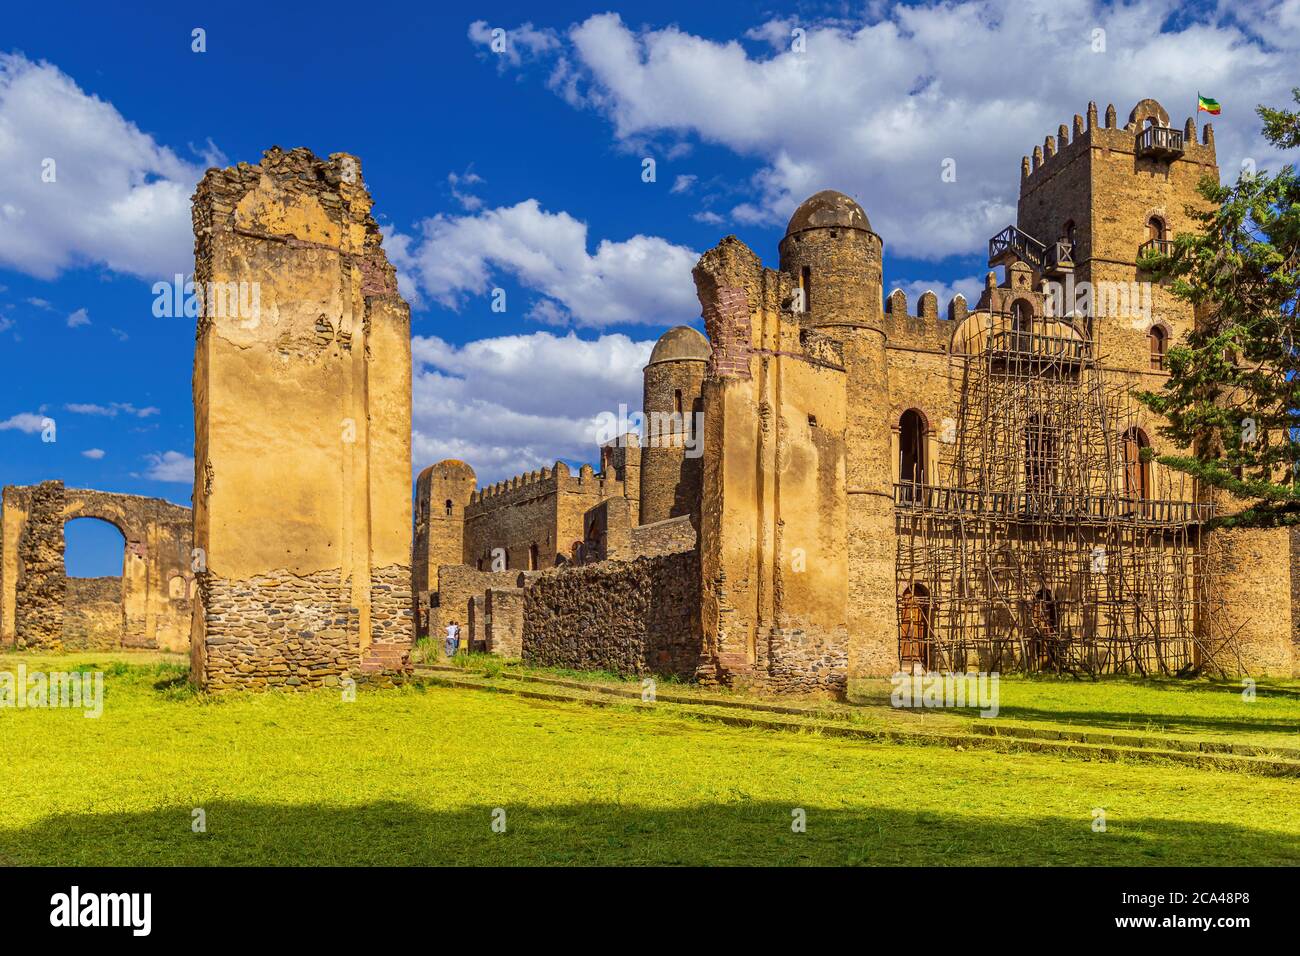 Royal Ethiopian Castle in Gondar, Ethiopia Stock Photo